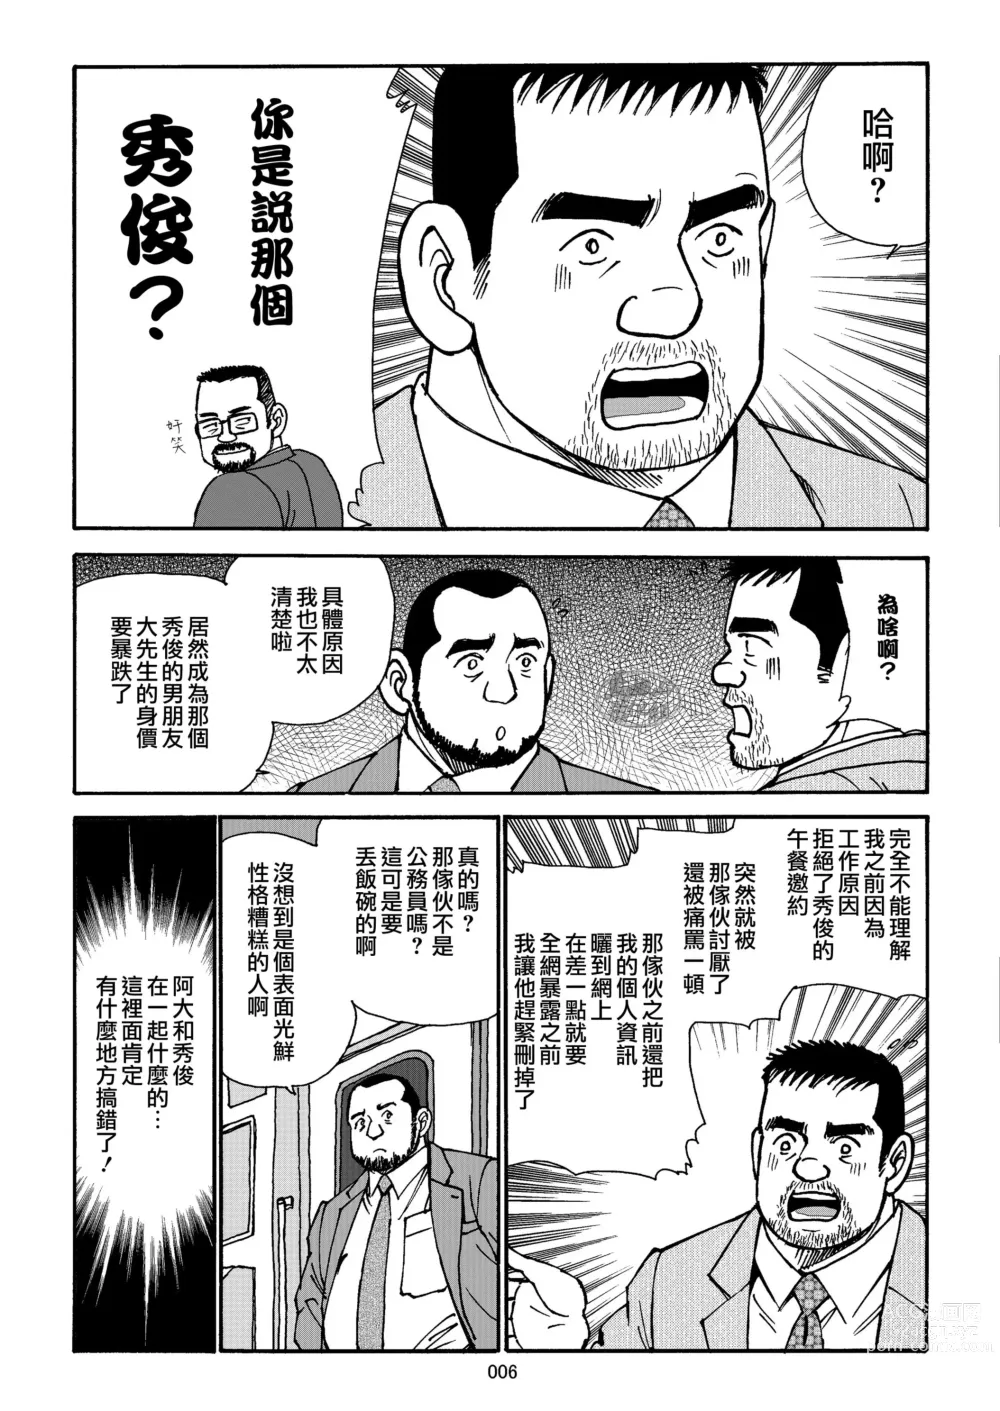 Page 6 of manga おいしい性活